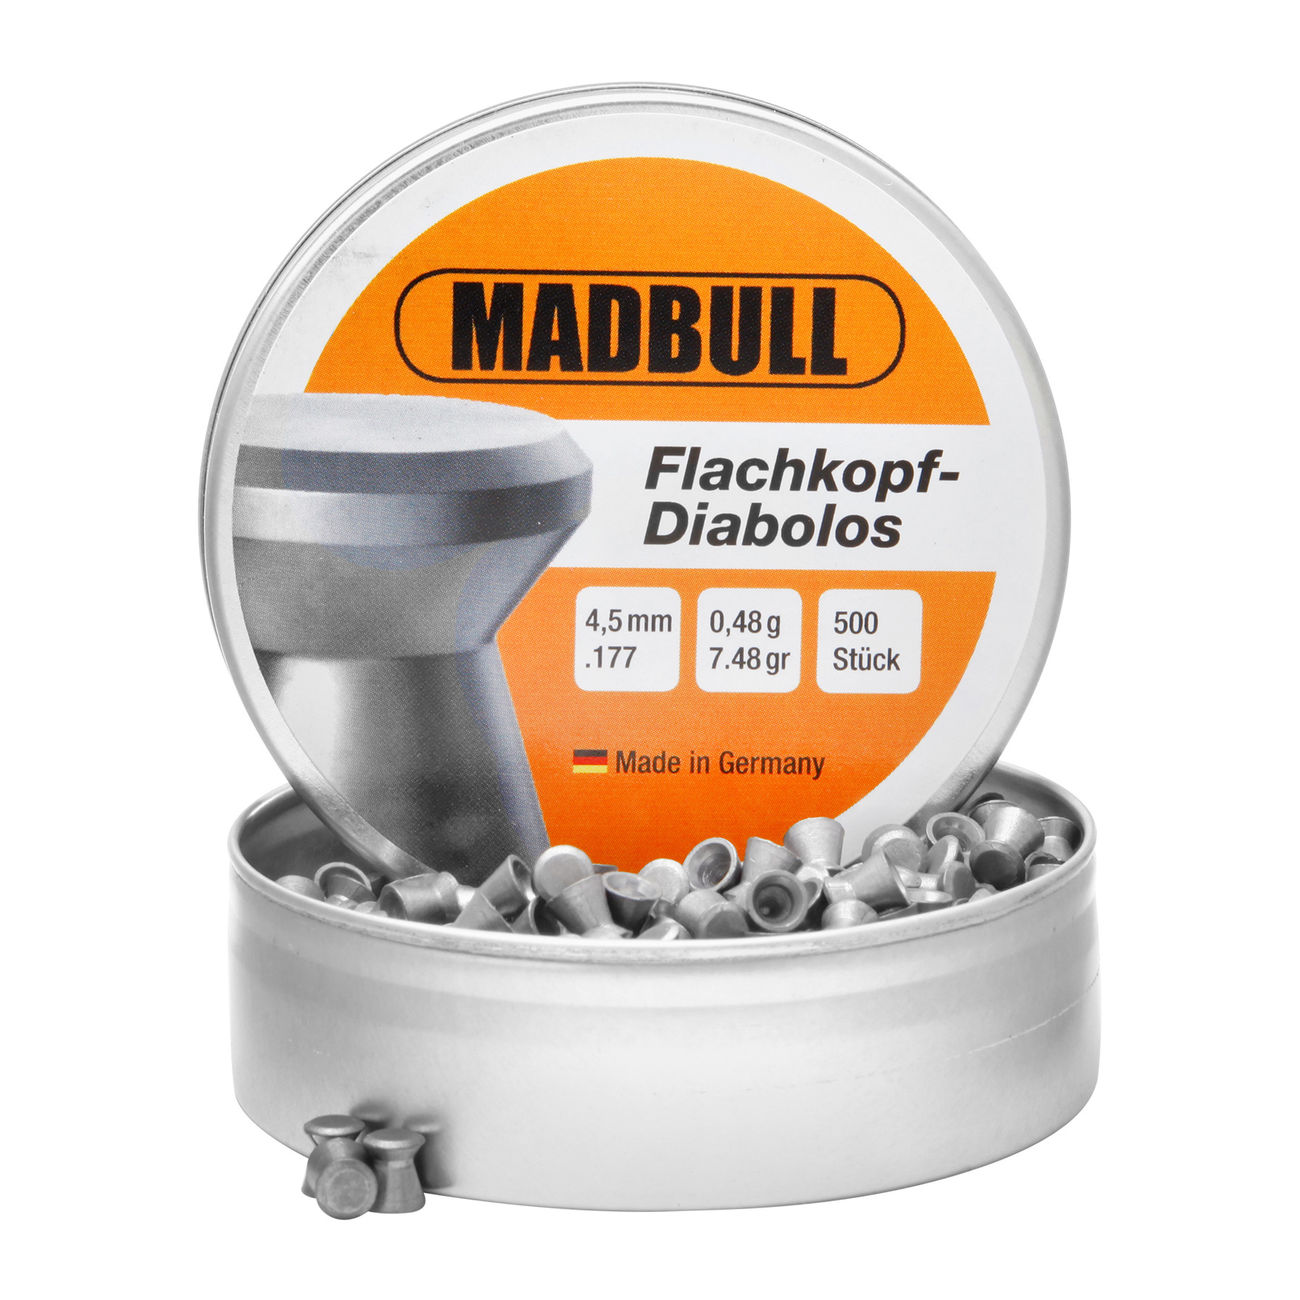 Madbull Flachkopf-Diabolos 4,5mm 500 Stück